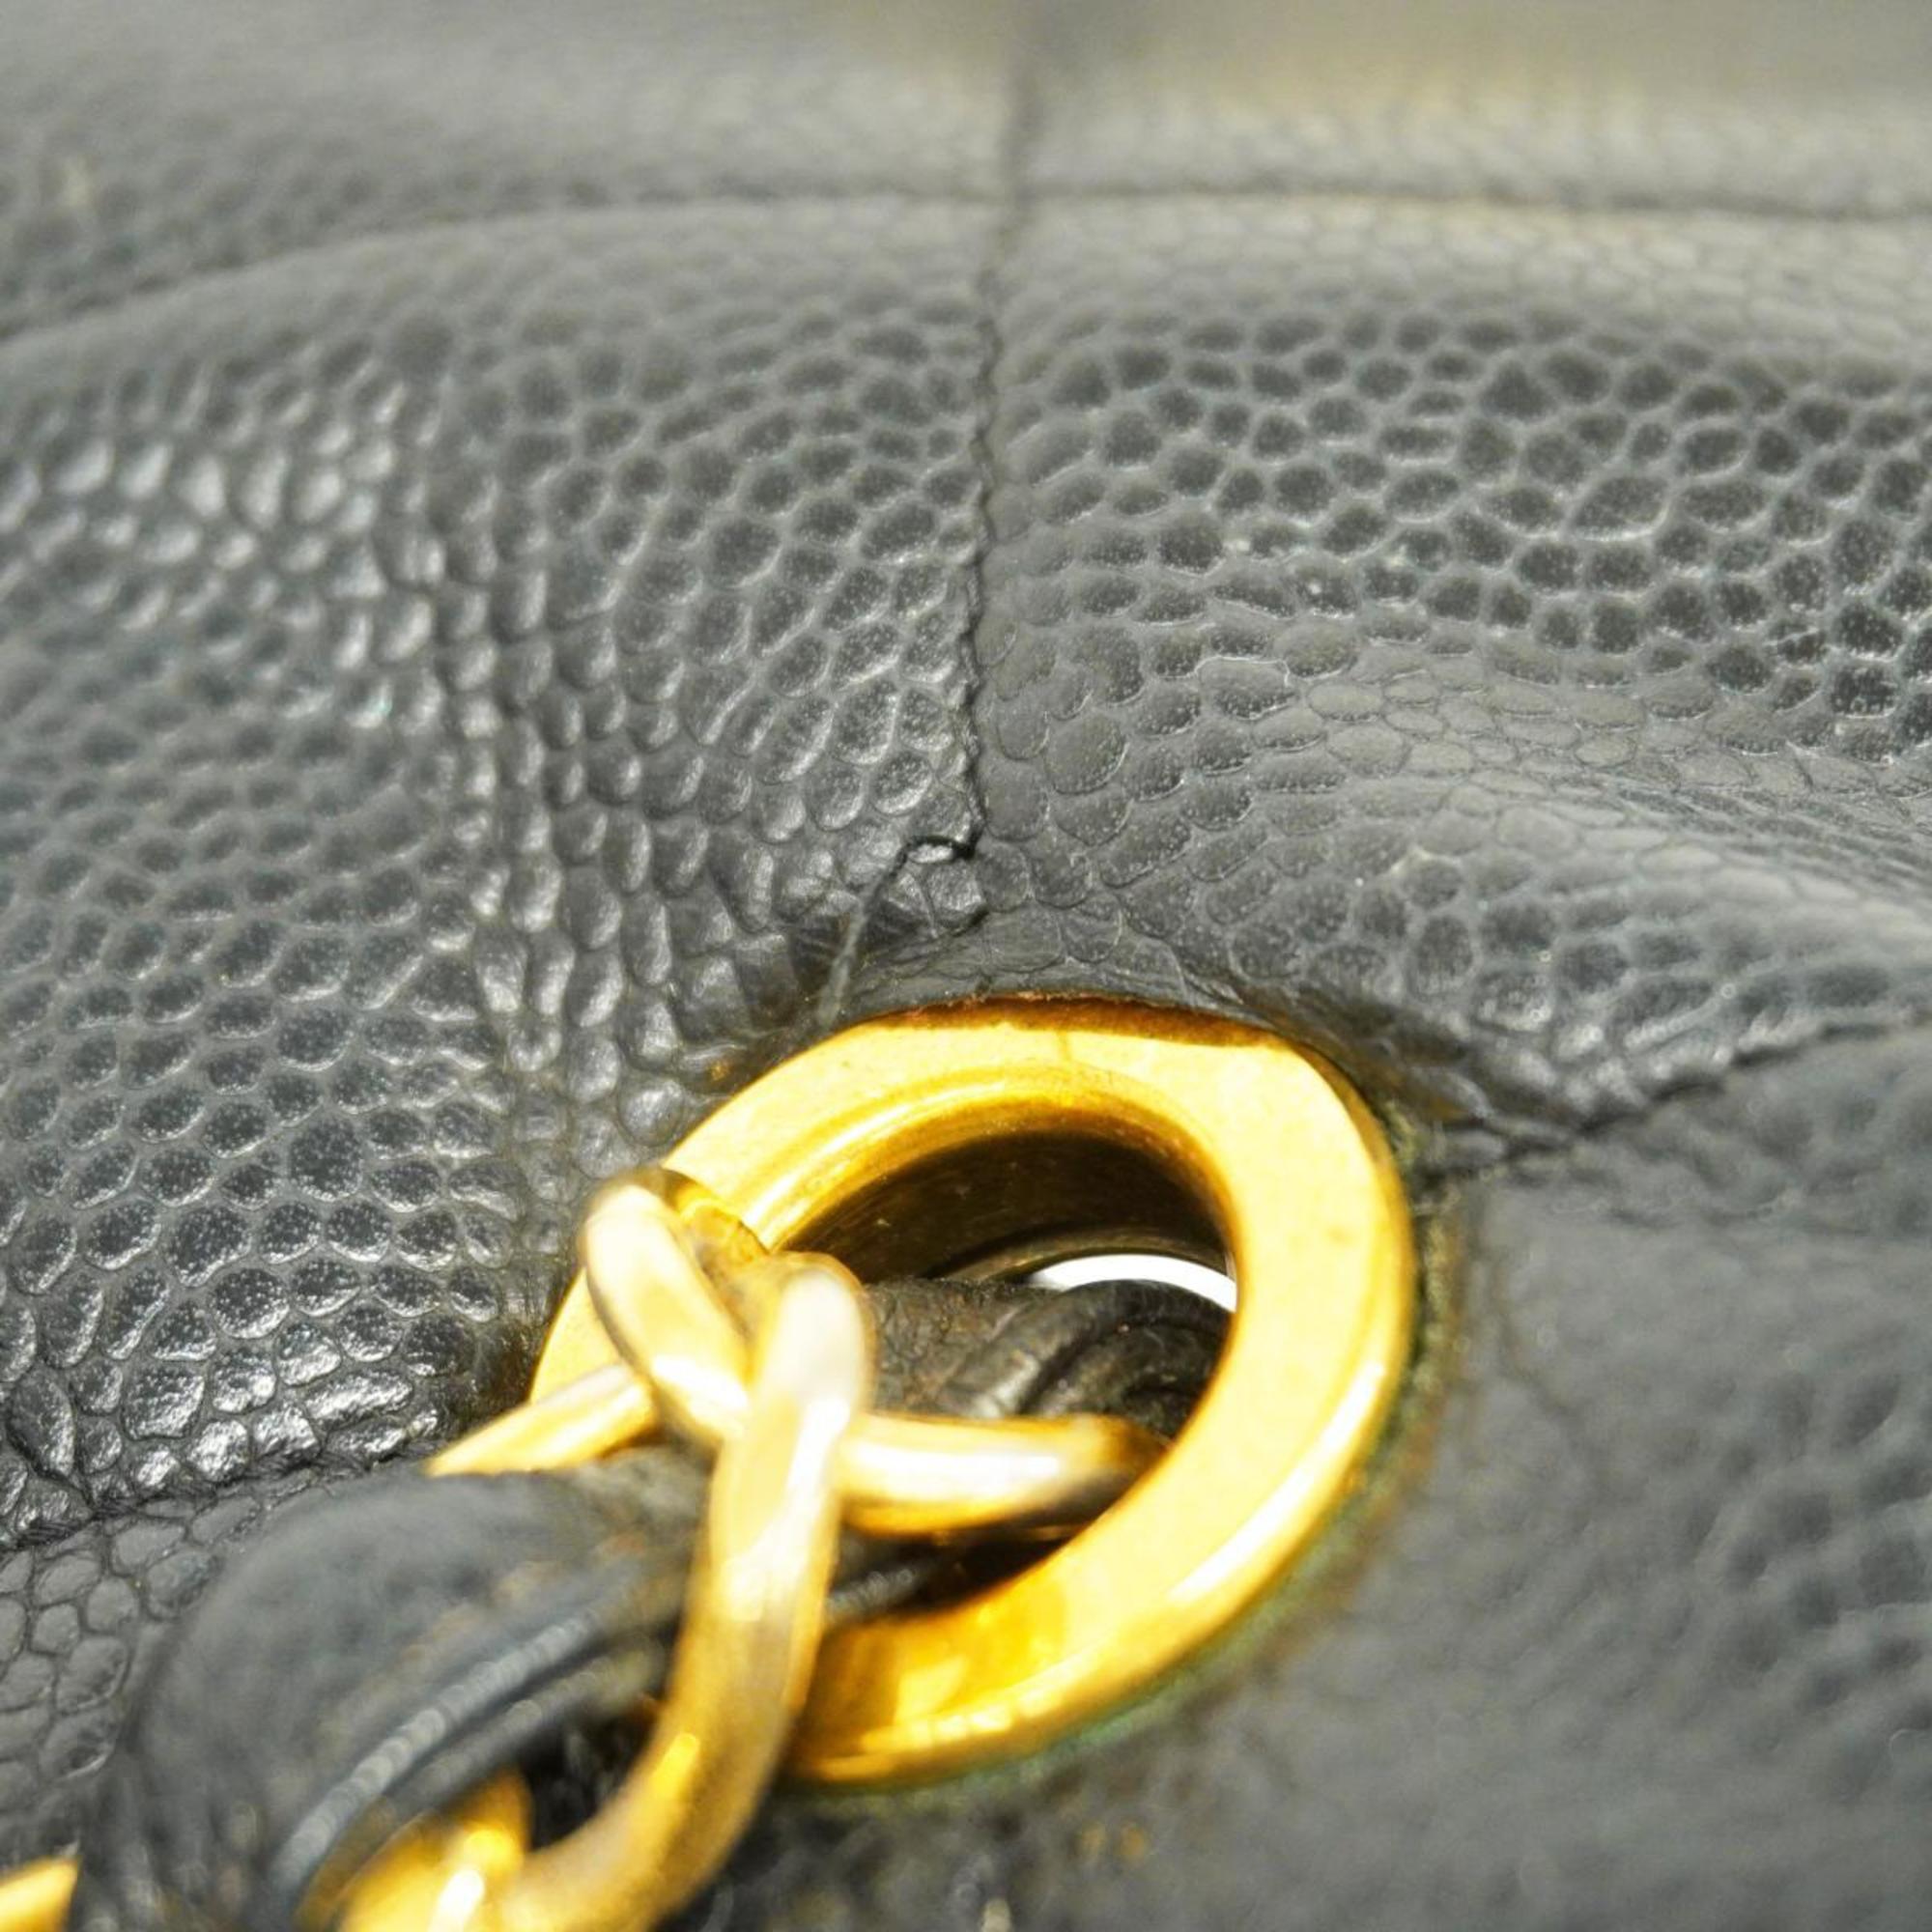 Chanel Shoulder Bag Matelasse Decacoco Chain Caviar Skin Black Women's